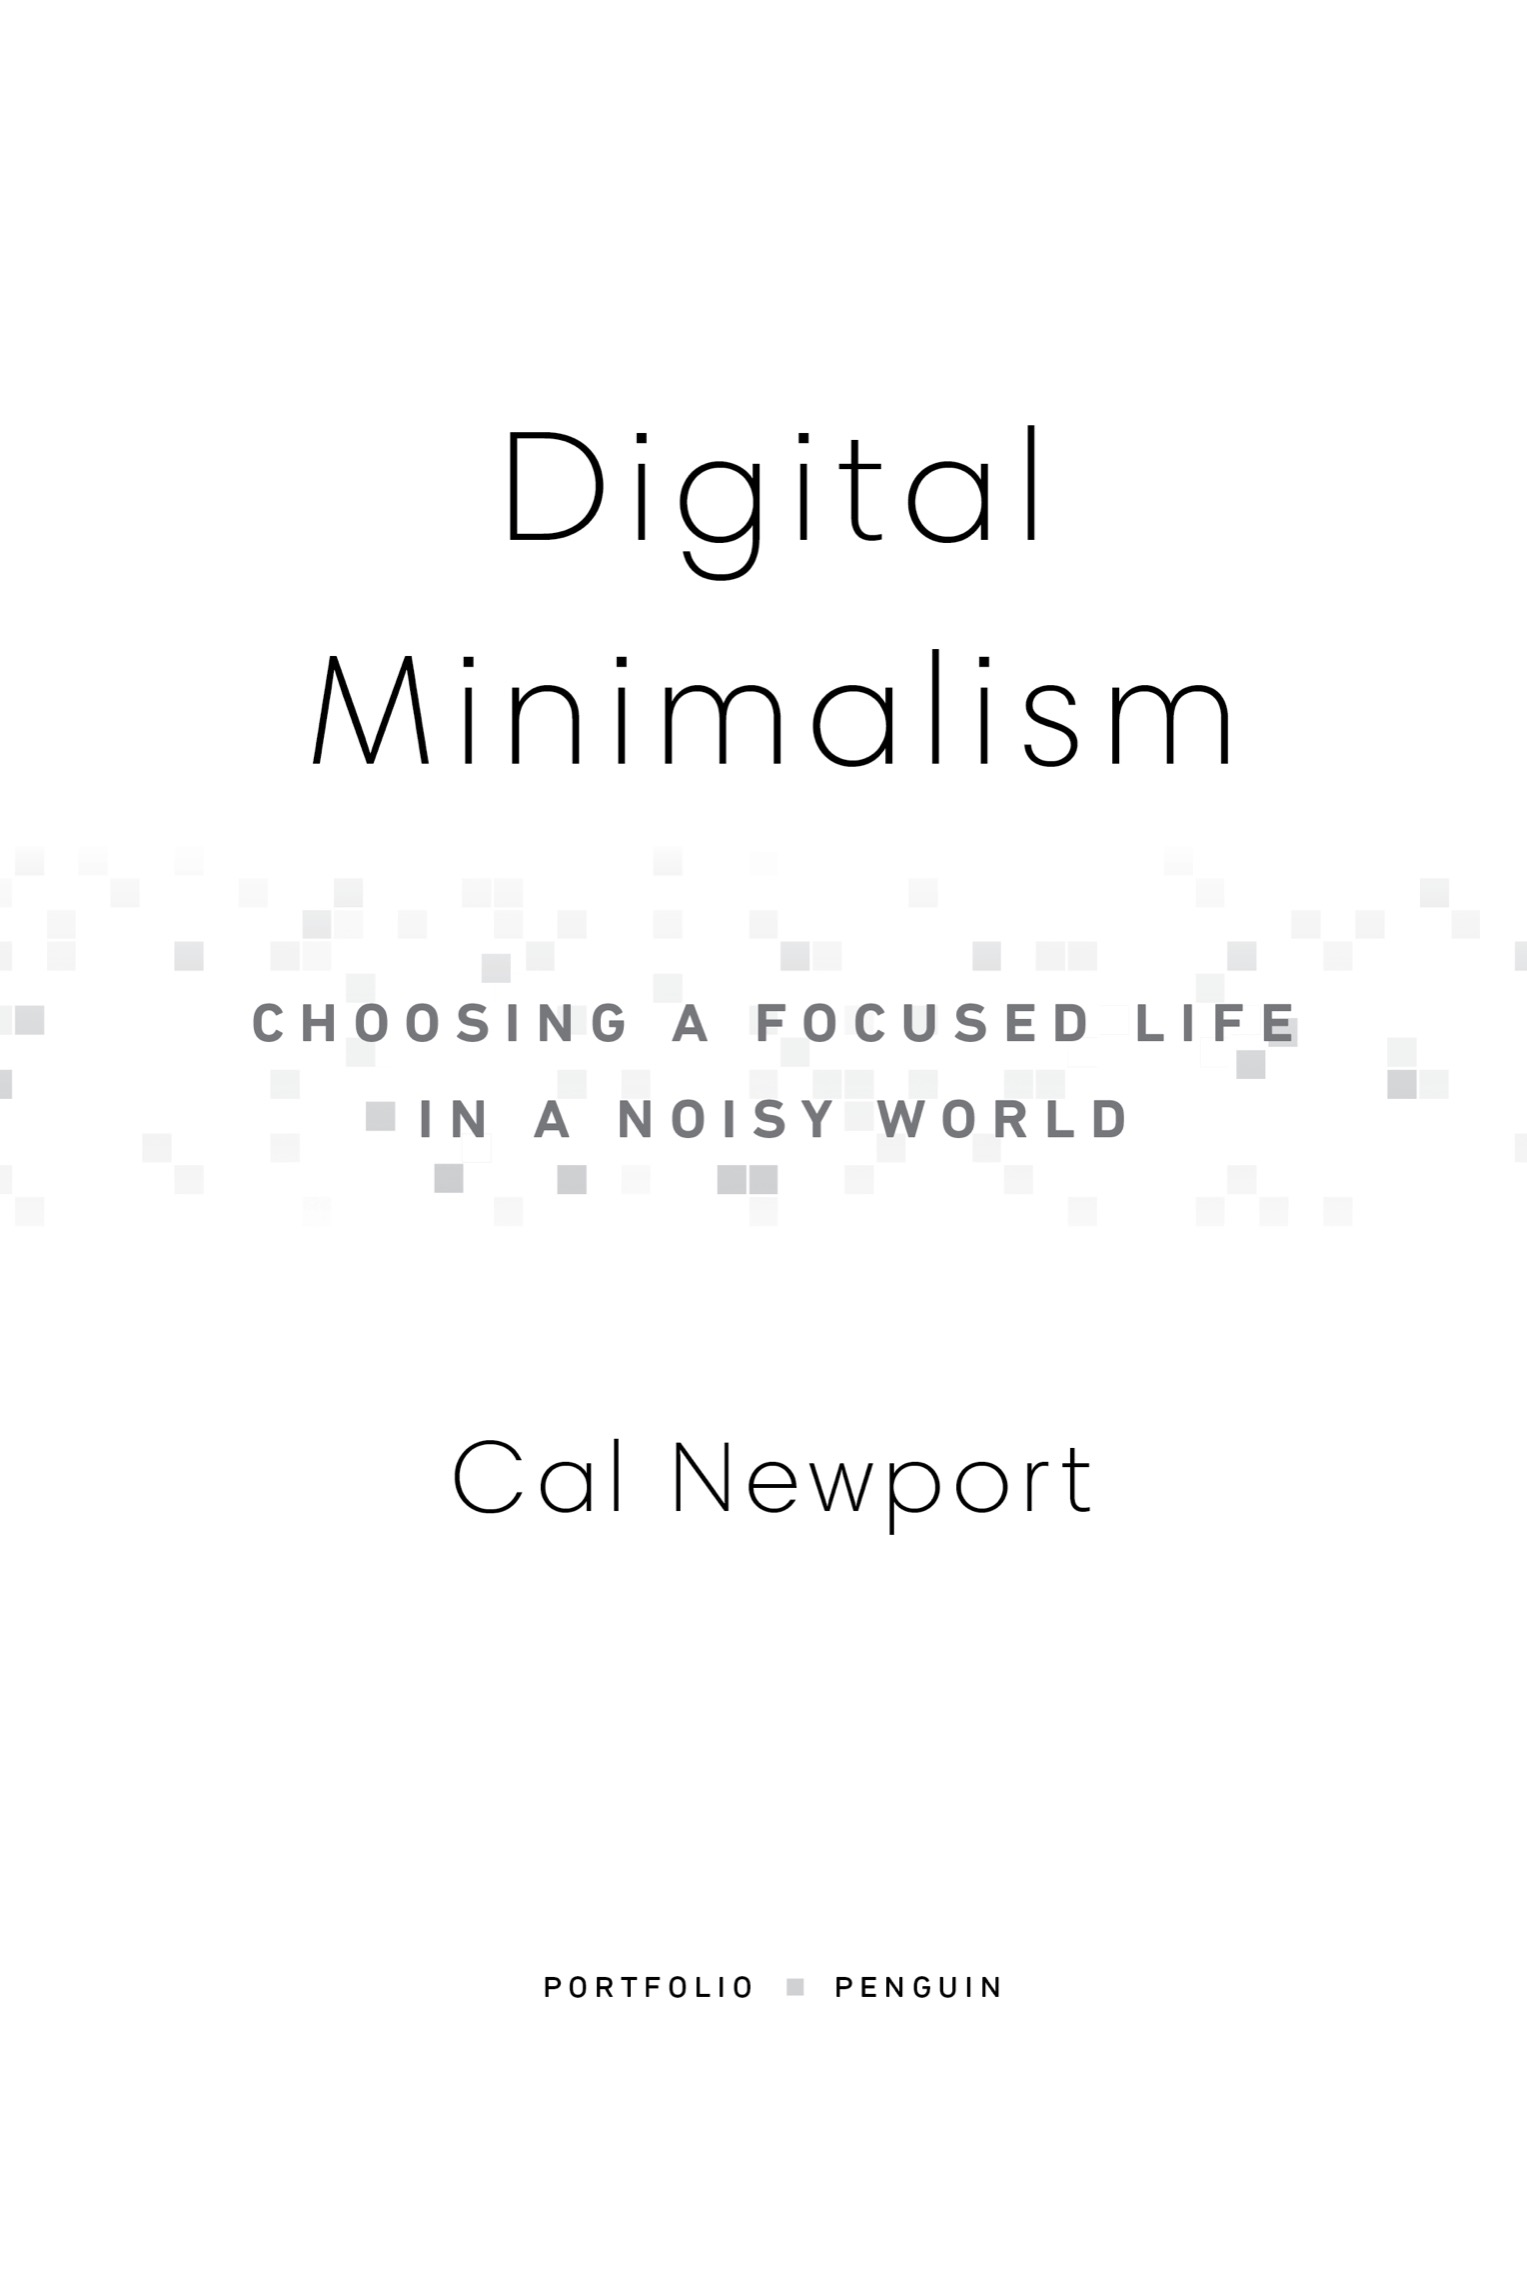 Book title, Digital Minimalism, Subtitle, Choosing a Focused Life in a Noisy World, author, Cal Newport, imprint, Portfolio